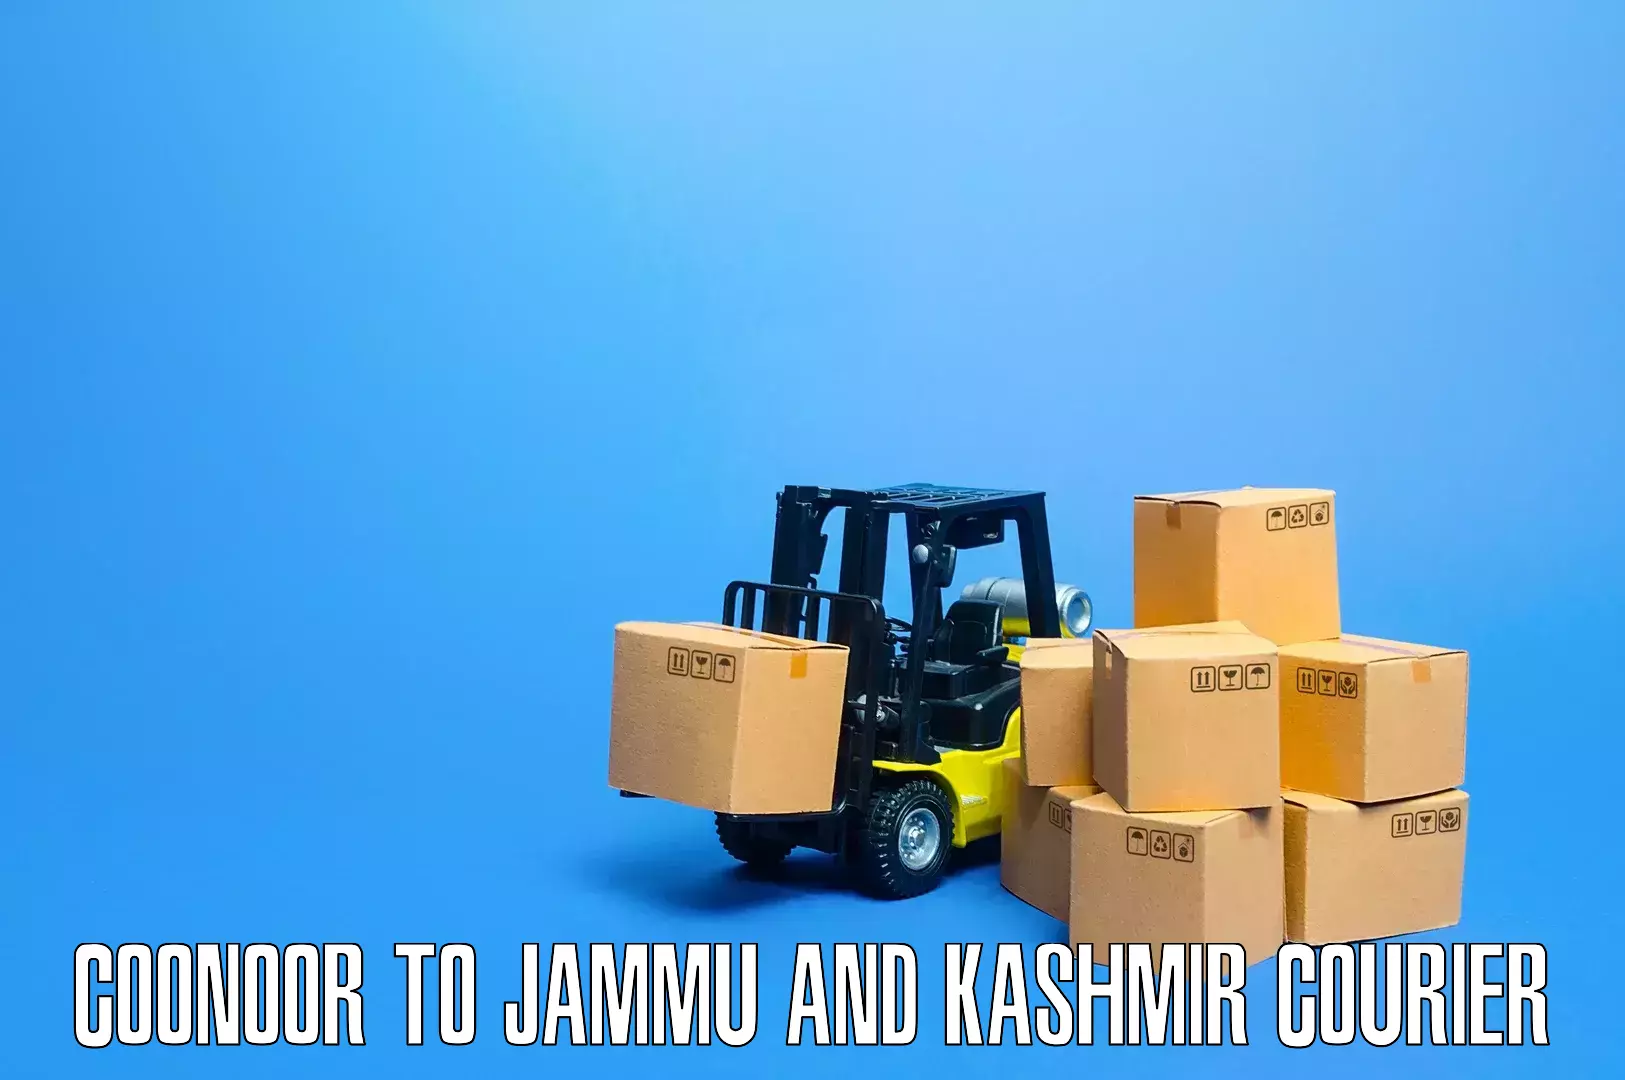 Furniture transport services Coonoor to Kishtwar